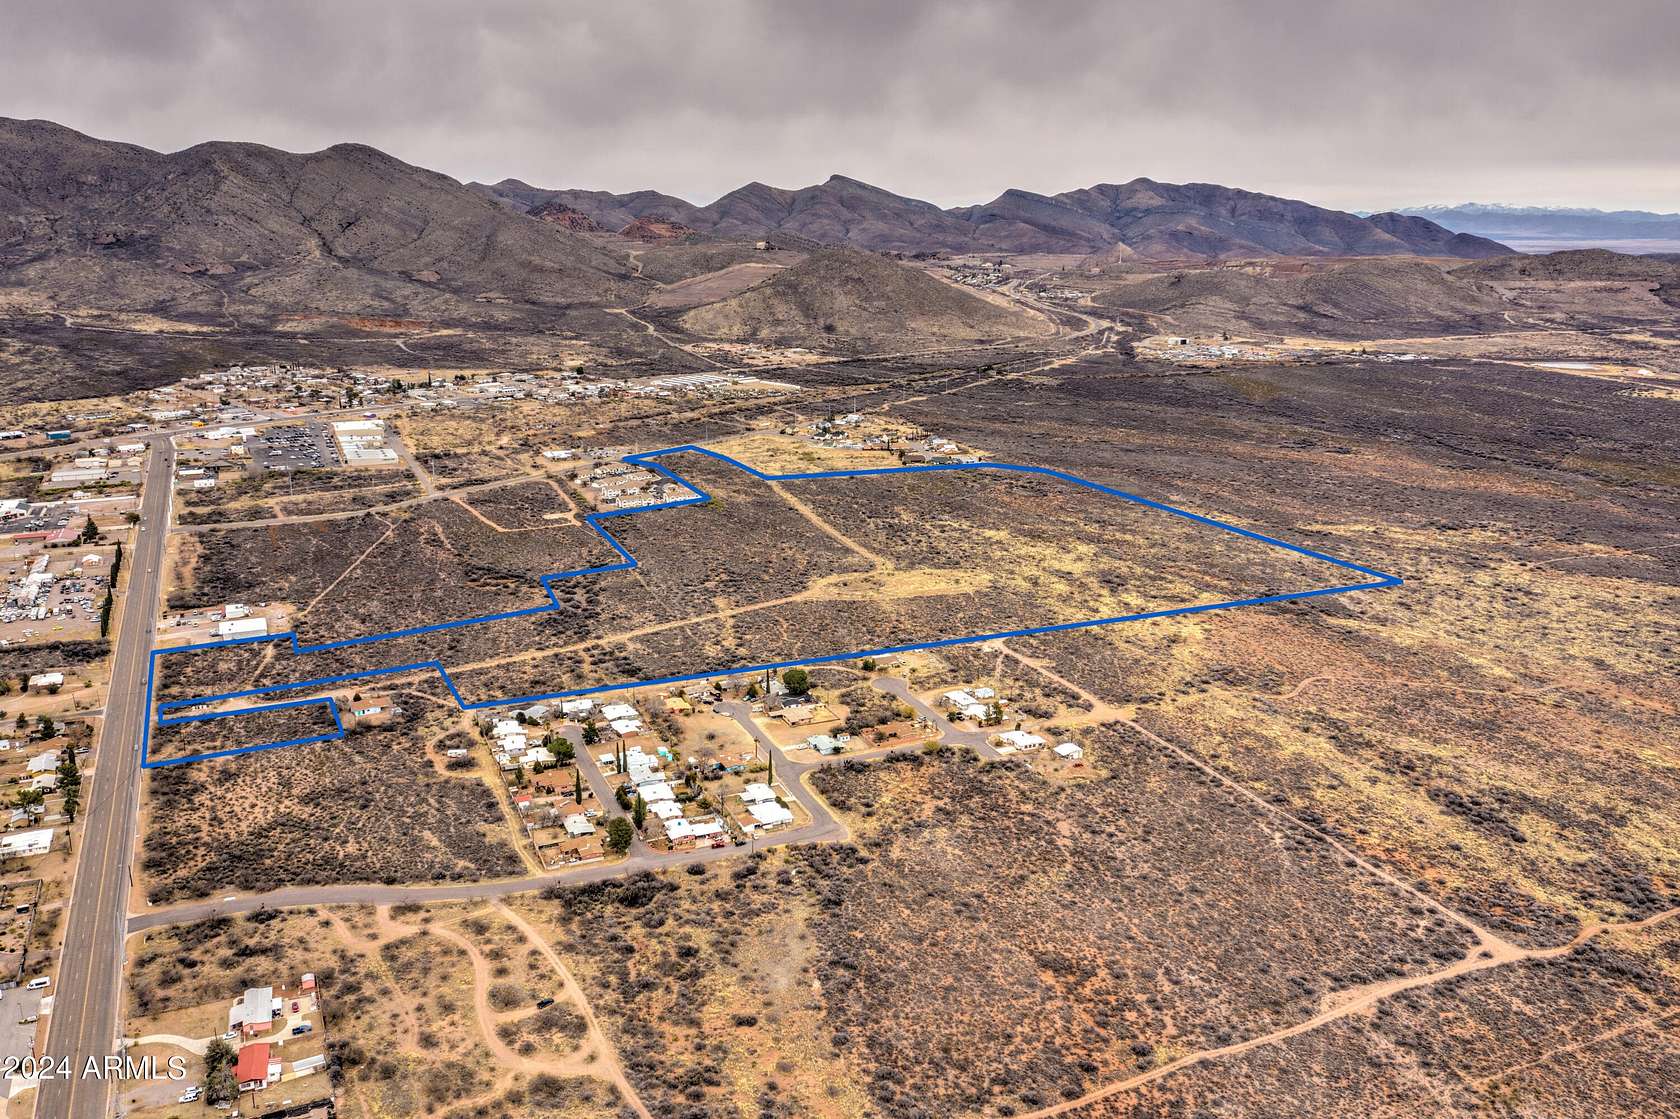 62.1 Acres of Recreational Land for Sale in Bisbee, Arizona